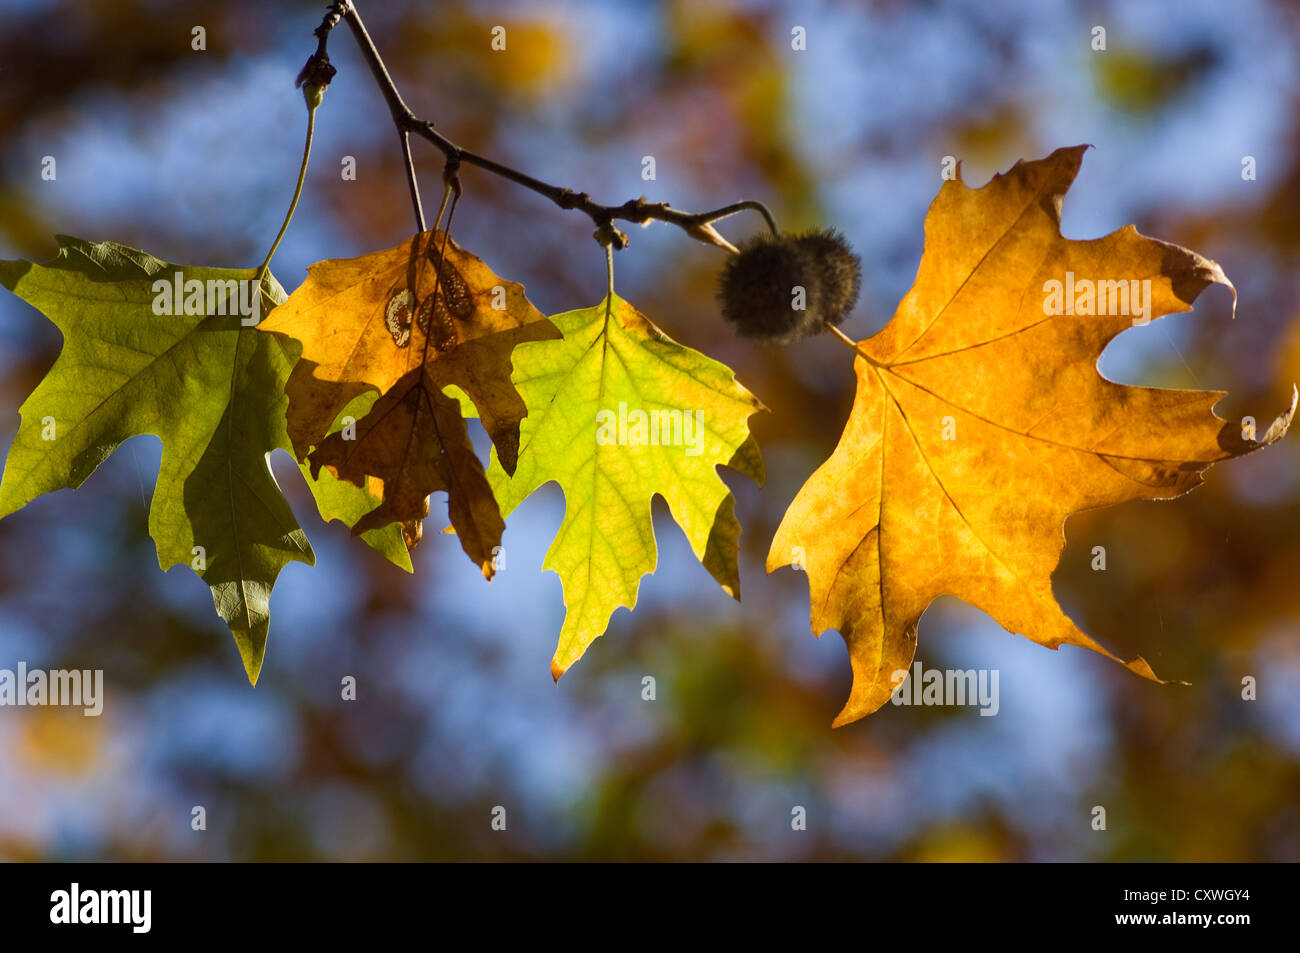 Ramita de un árbol de avión con follaje de otoño retroiluminado Foto de stock